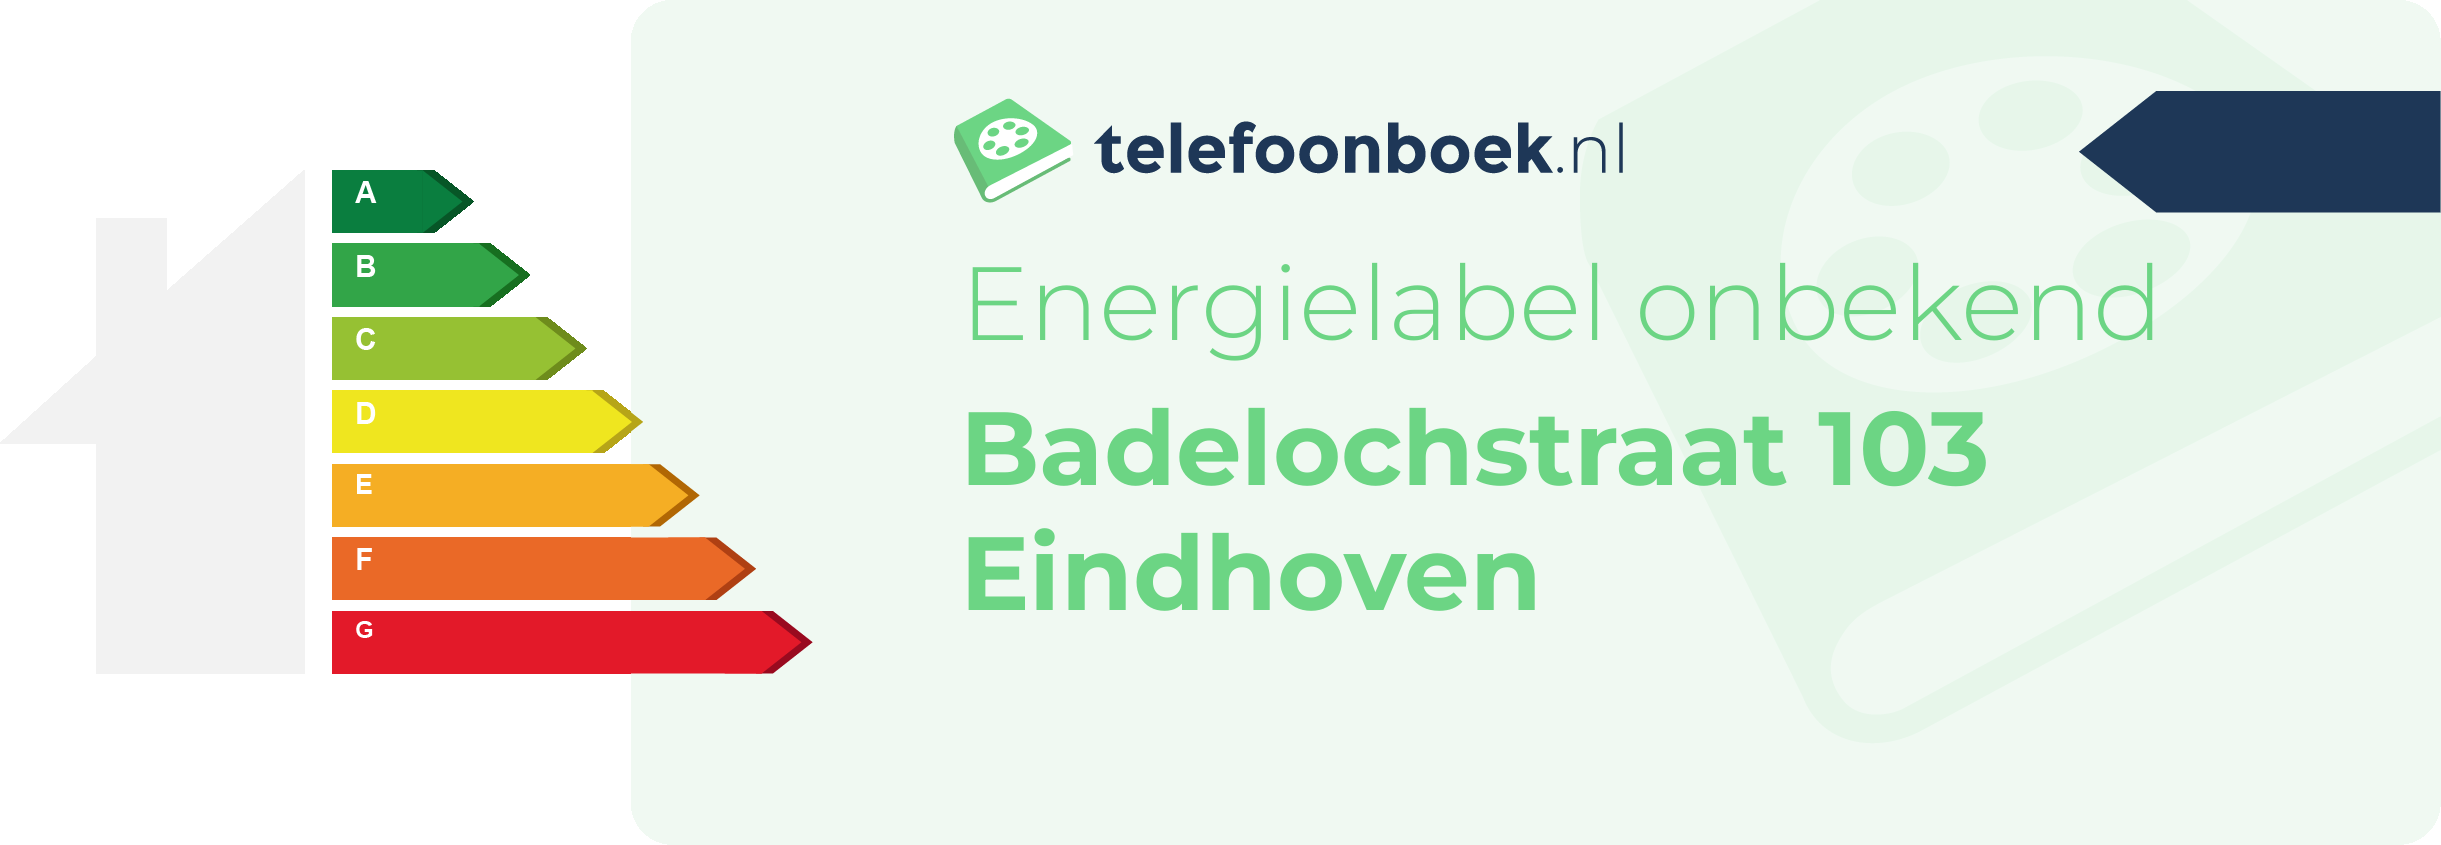 Energielabel Badelochstraat 103 Eindhoven